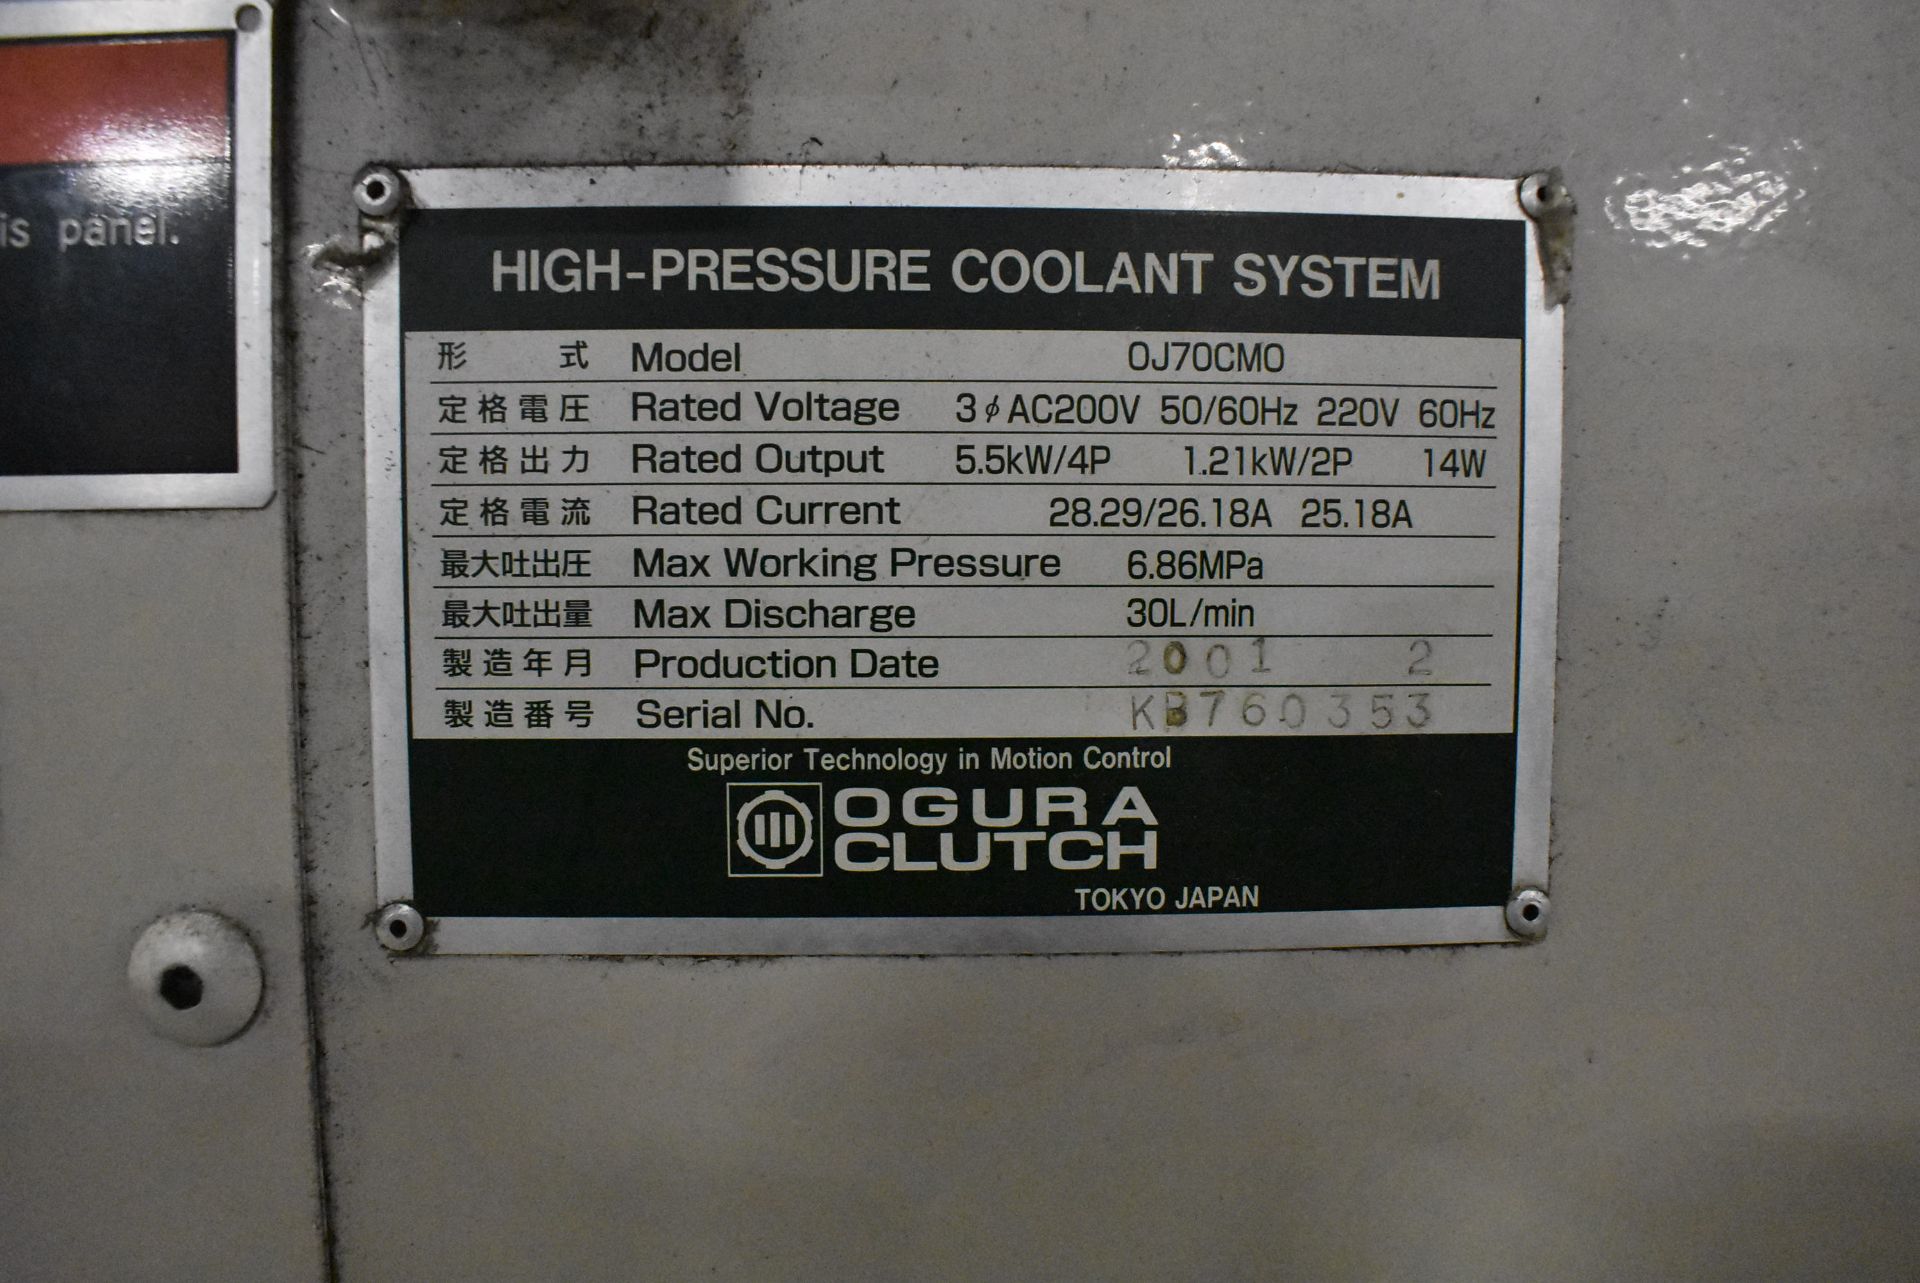 OGURA CLUTCH MODEL OJ70CM0 HIGH PRESSURE COOLANT SYSTEM S/N KB760353 (2001), MAX WORKING PRESSURE: - Image 7 of 8